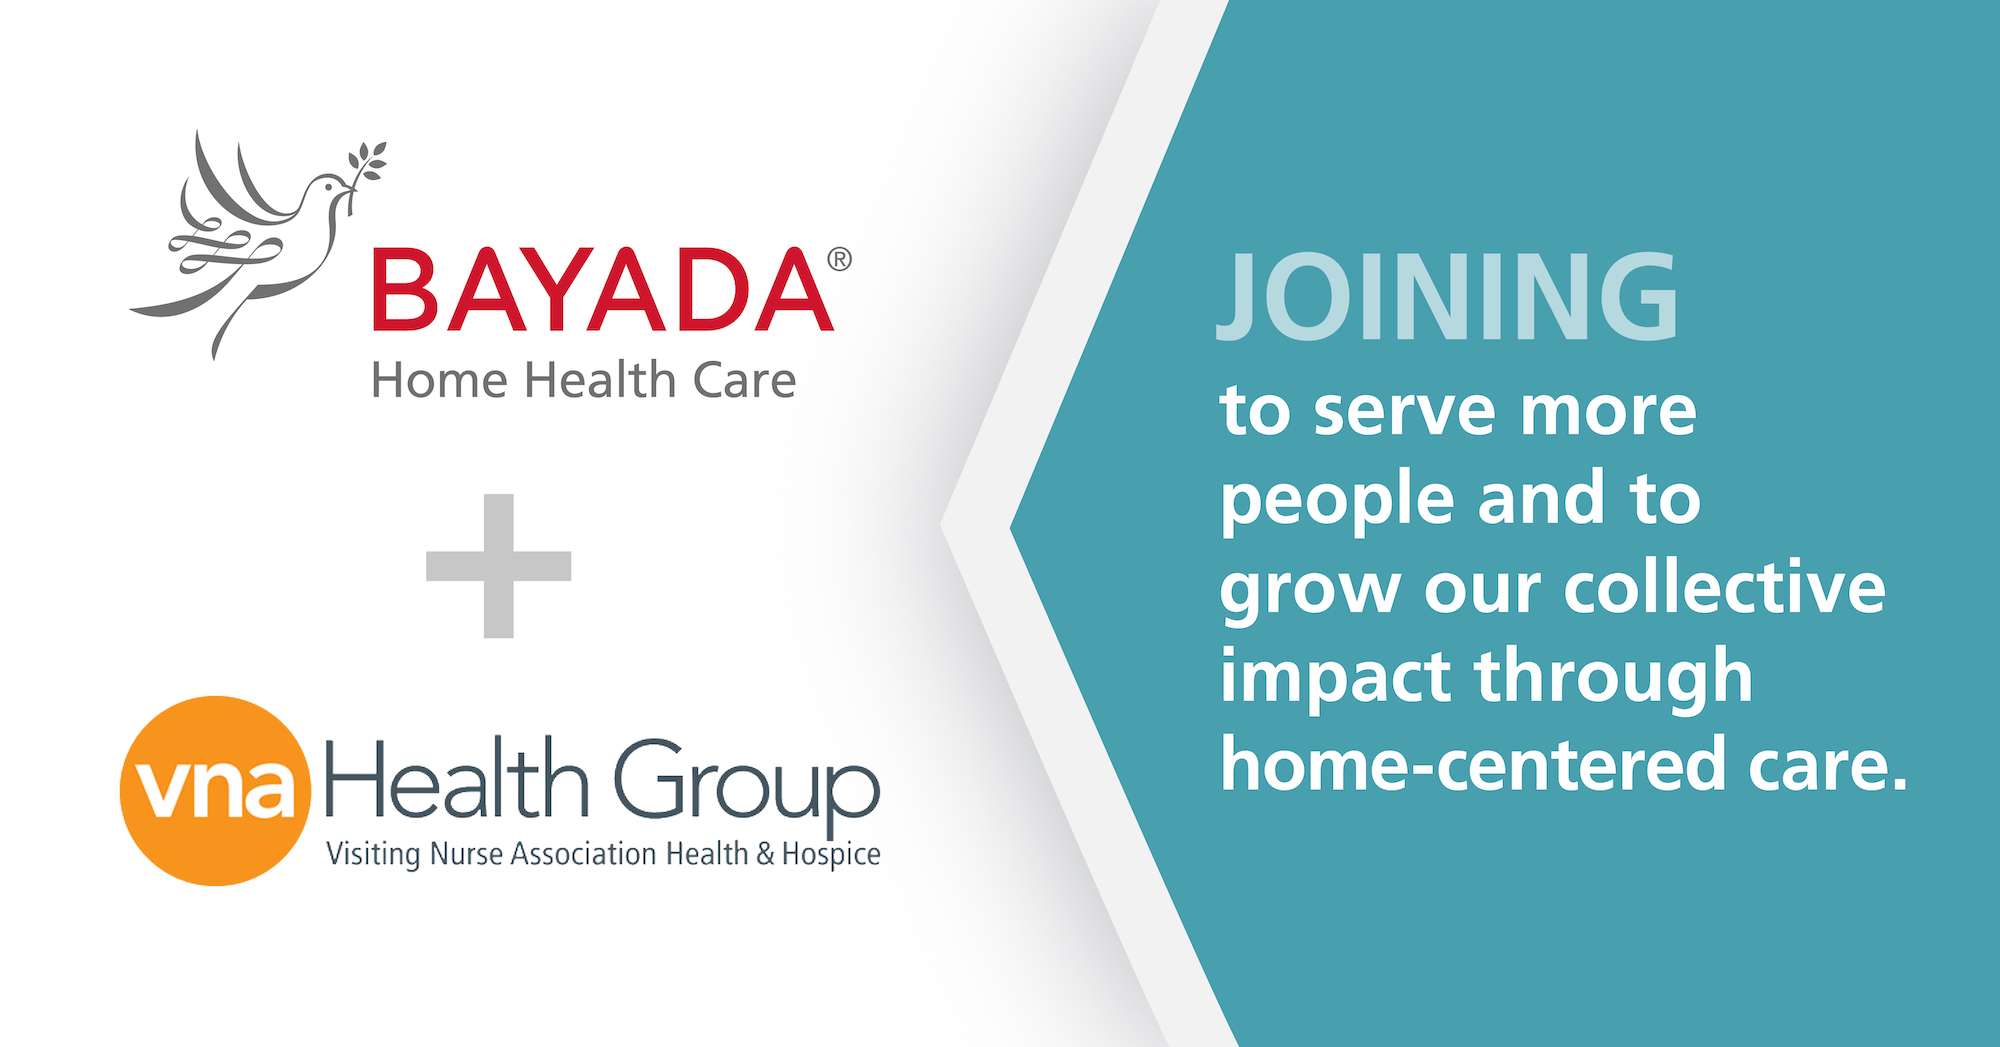 VNA Health Group to join Bayada Home Health Care